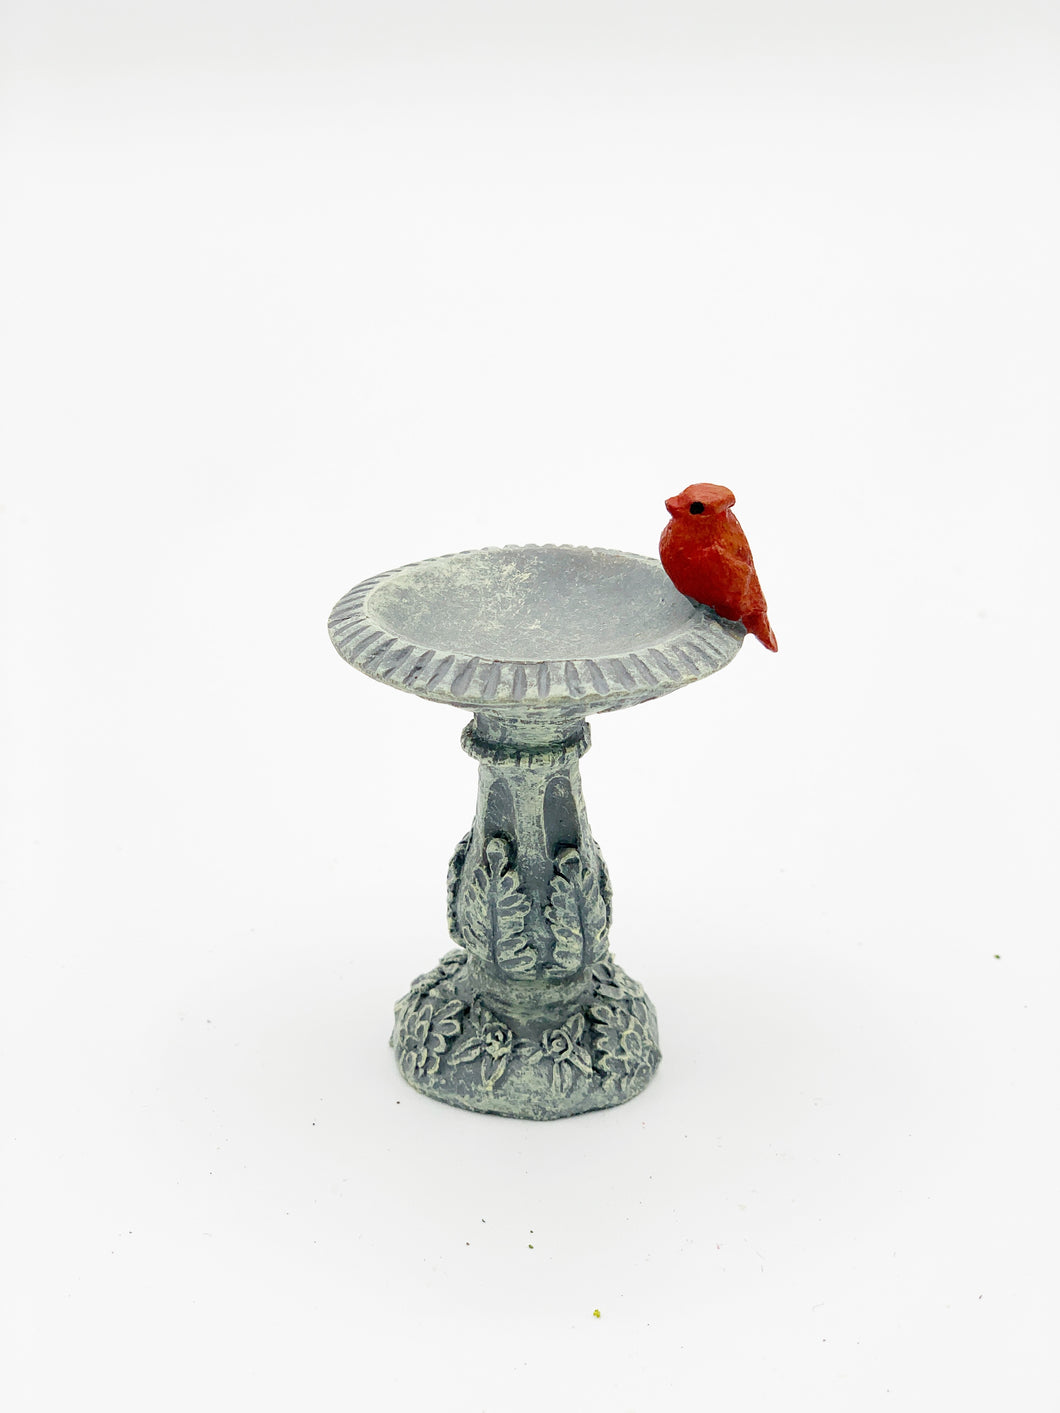 Bird Bath with Cardinal